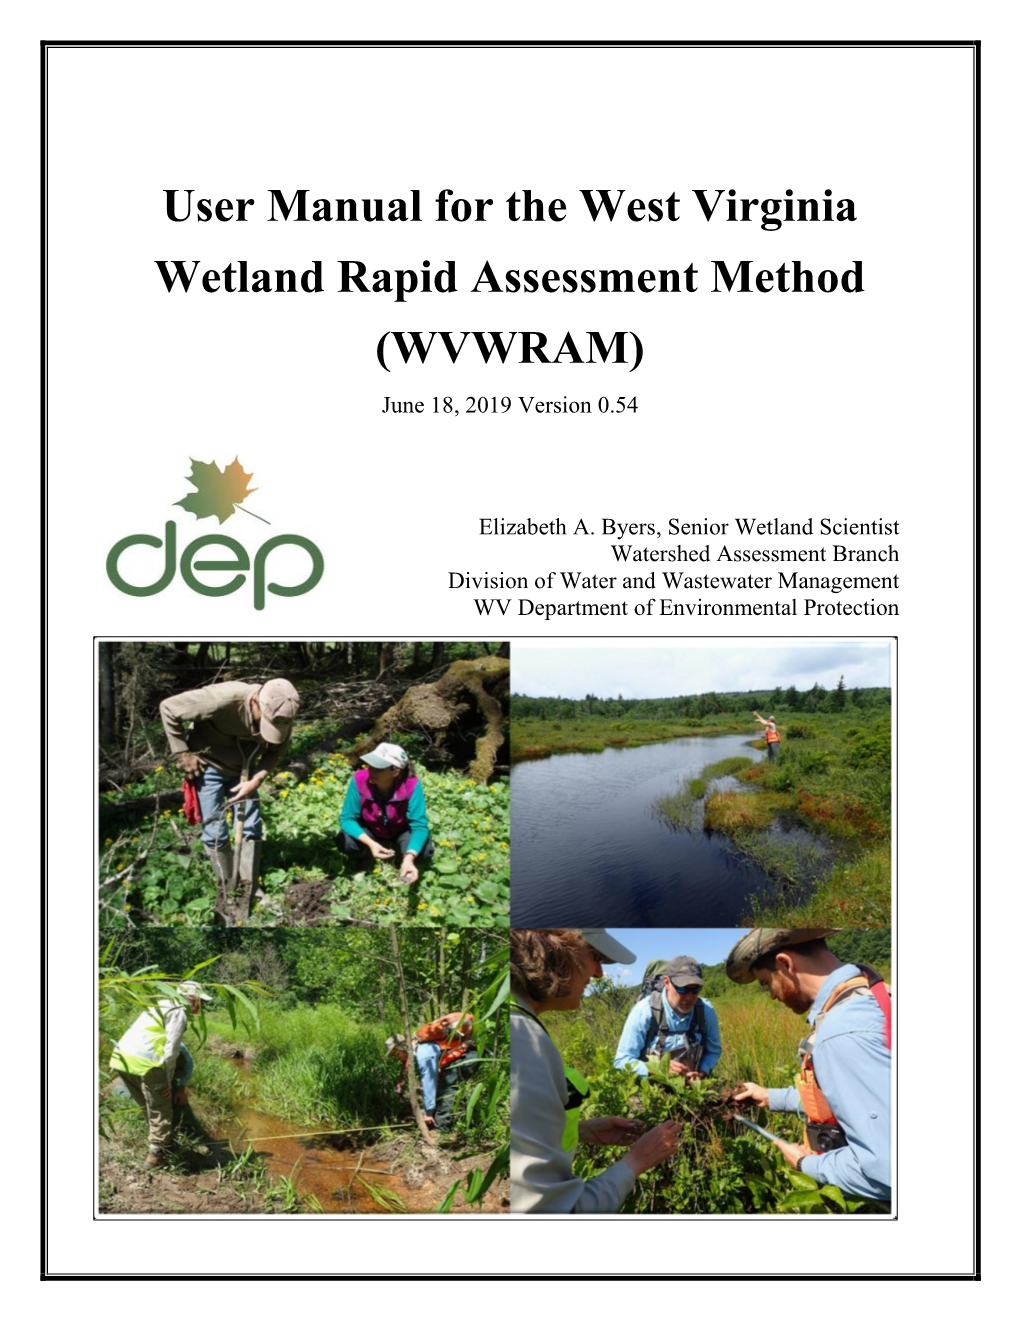 User Manual for the West Virginia Wetland Rapid Assessment Method (WVWRAM) June 18, 2019 Version 0.54